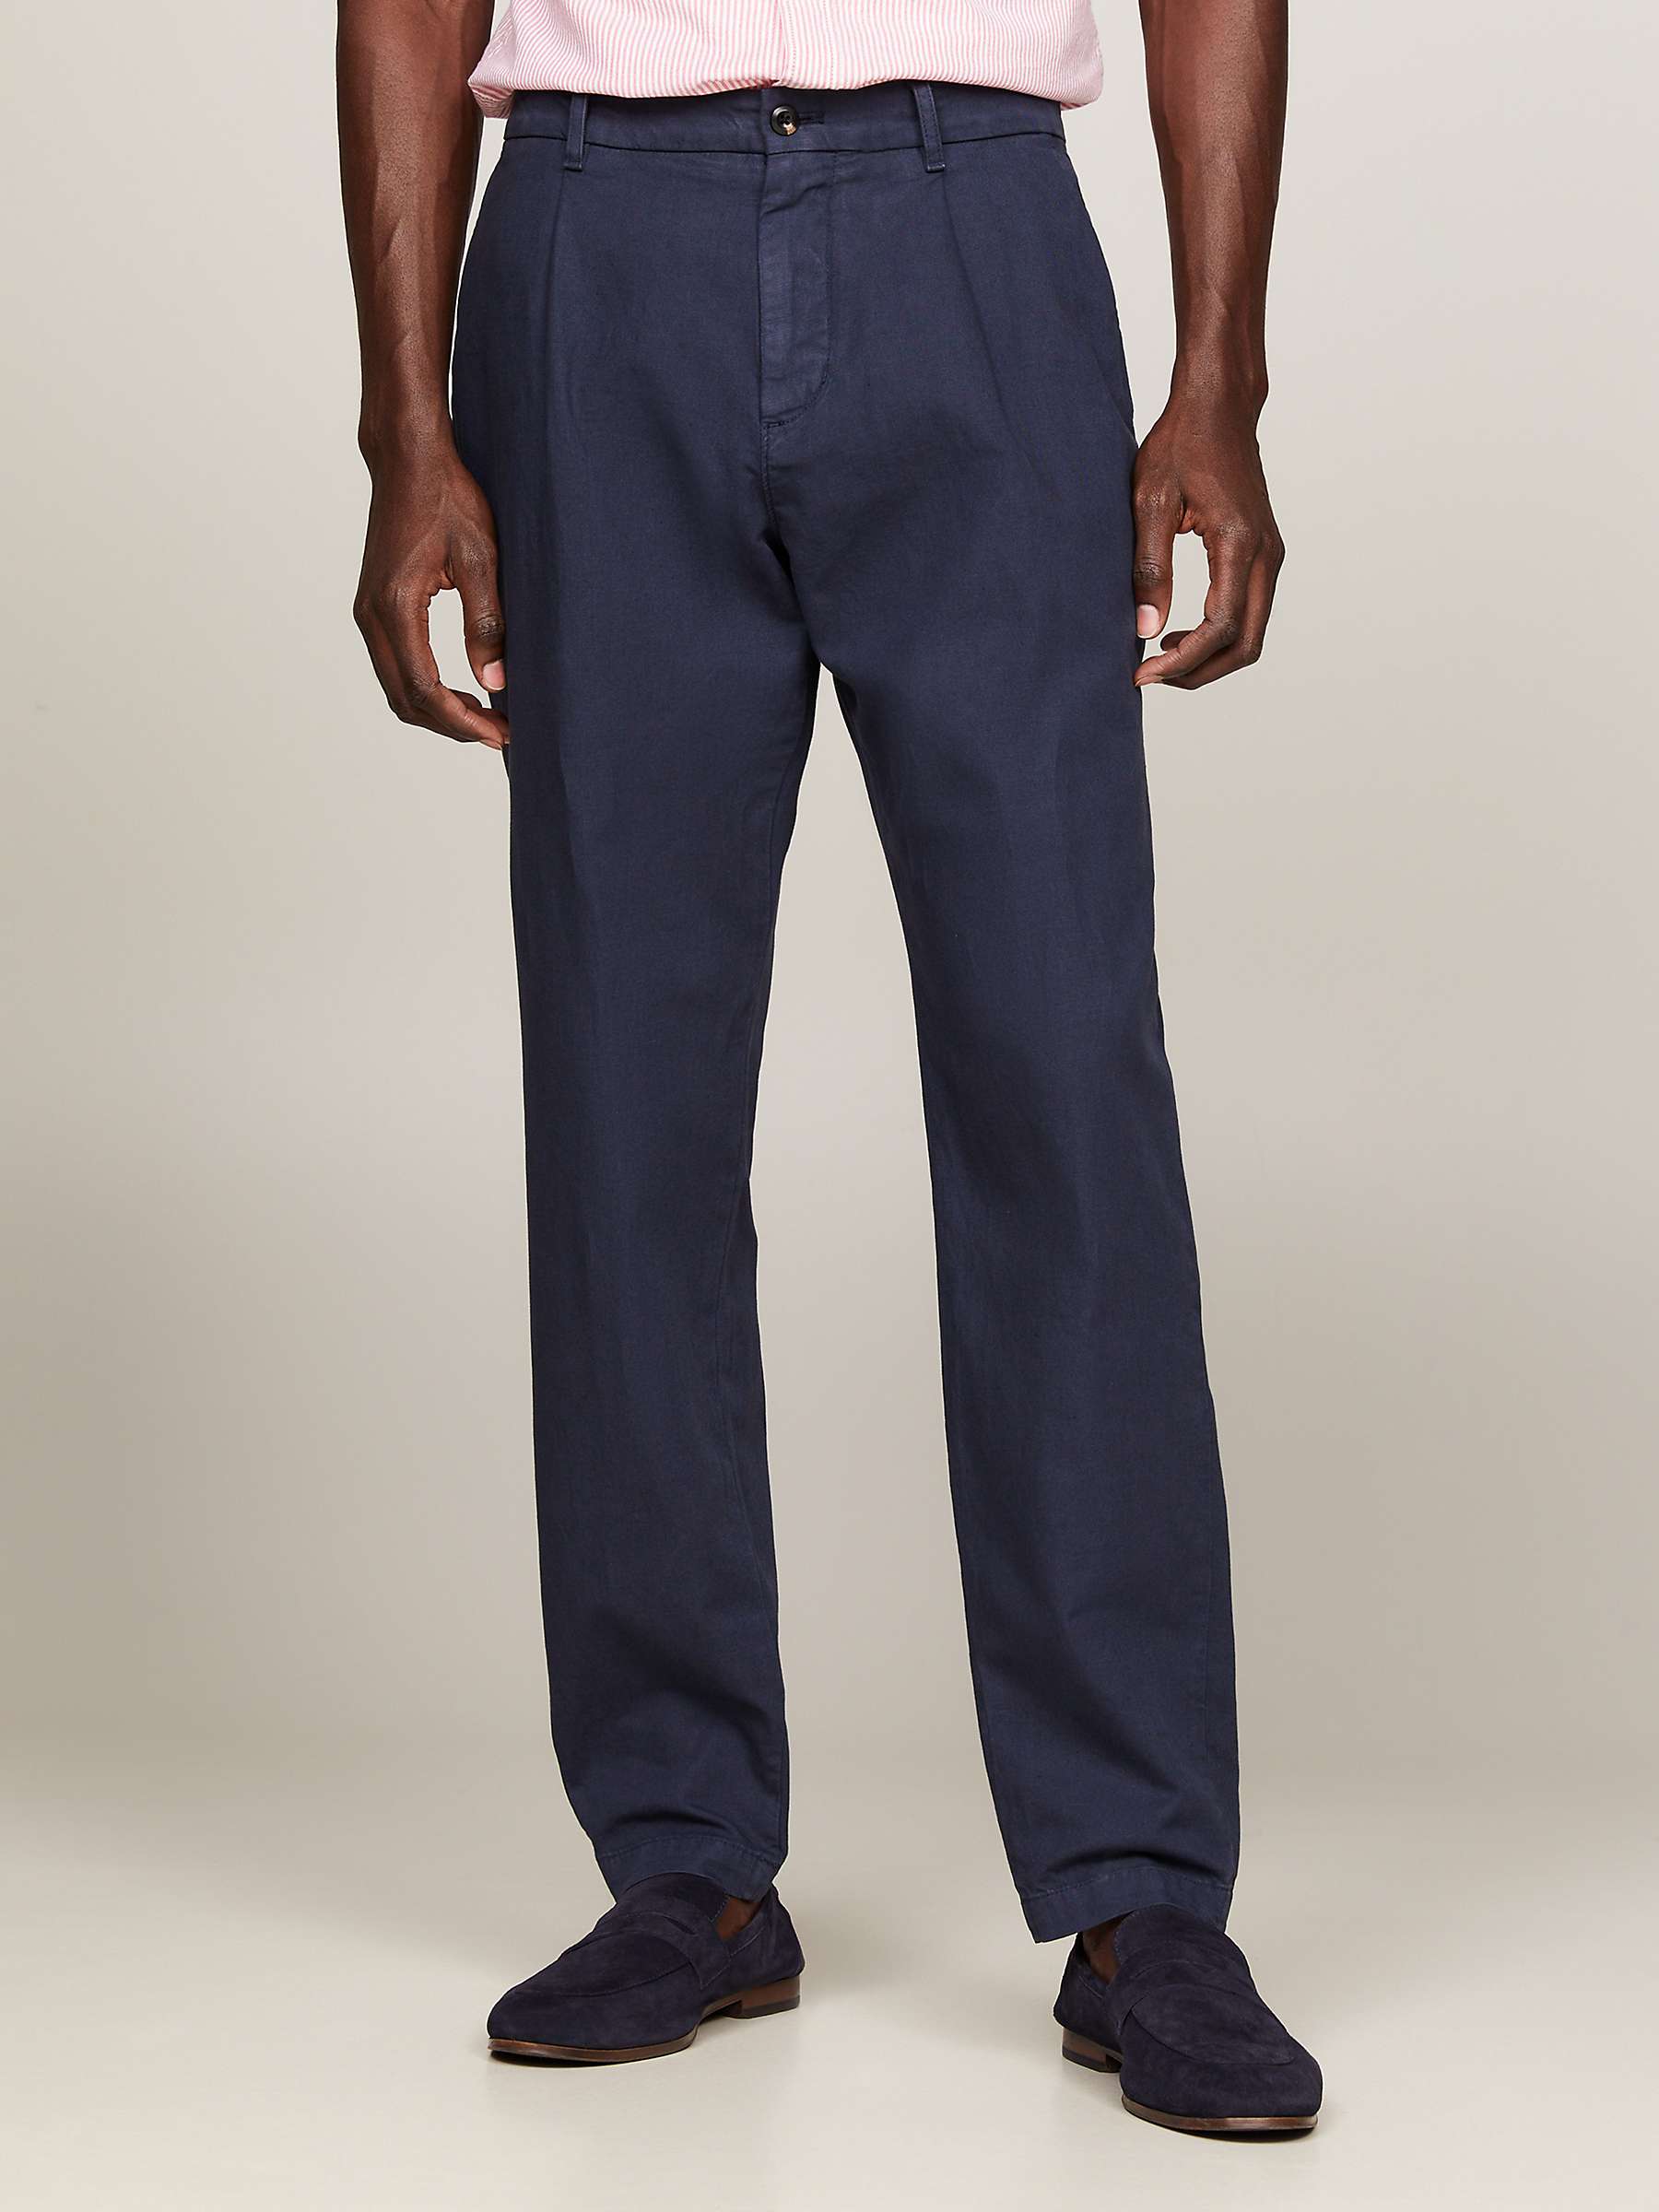 Buy Tommy Hilfiger Harlem Chino Trousers, Desert Sky Online at johnlewis.com